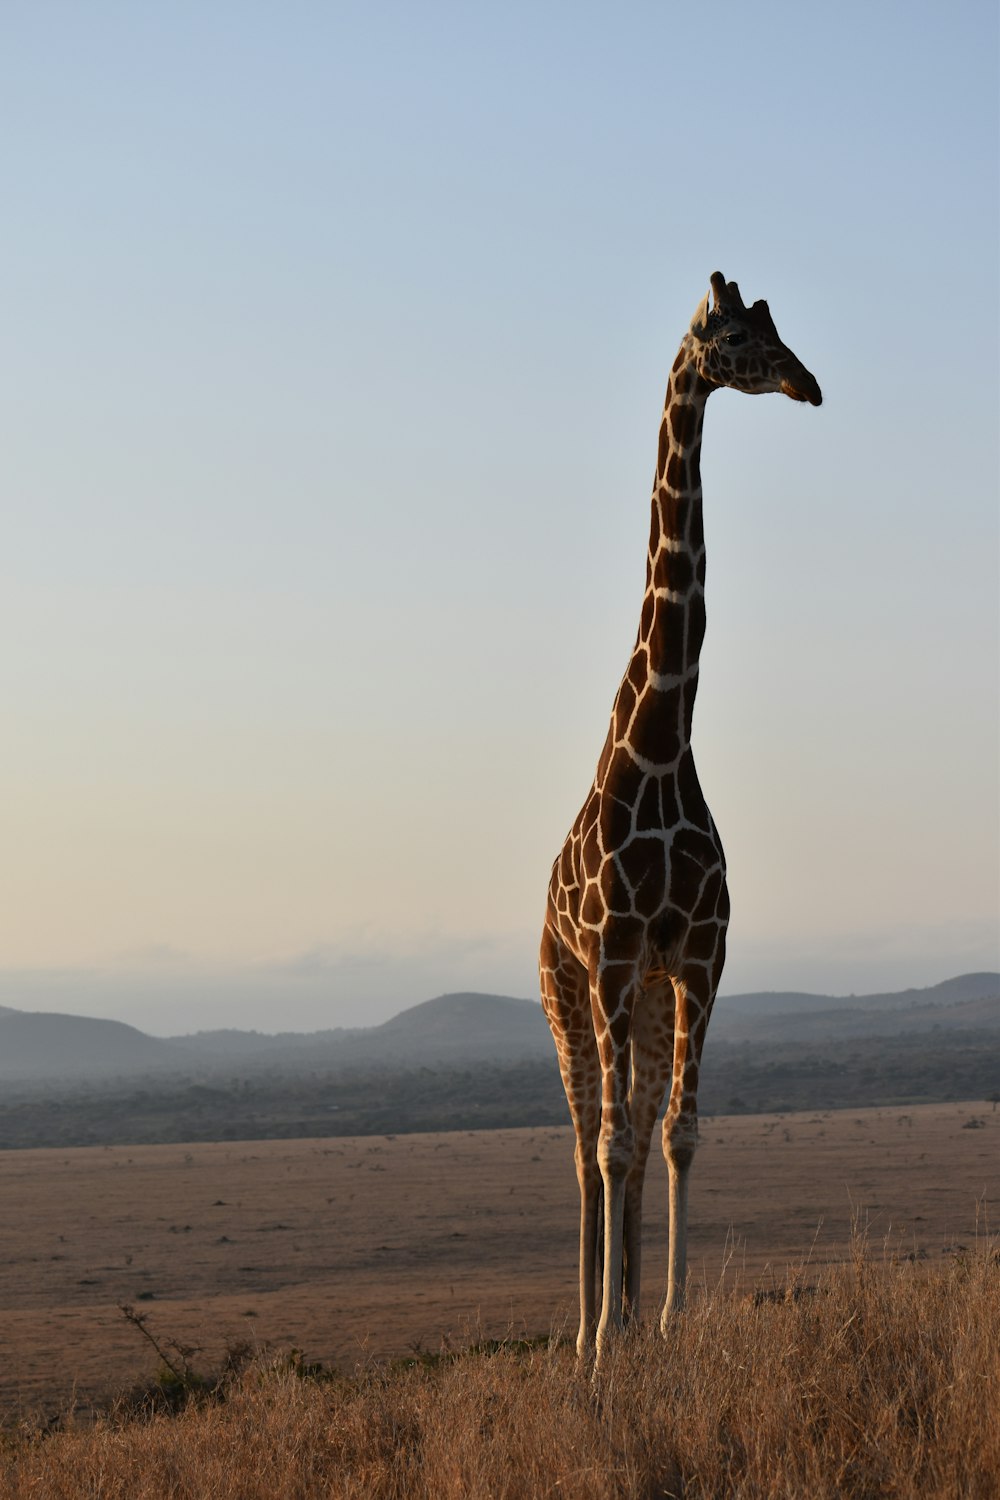 giraffe walking on brown field during daytime